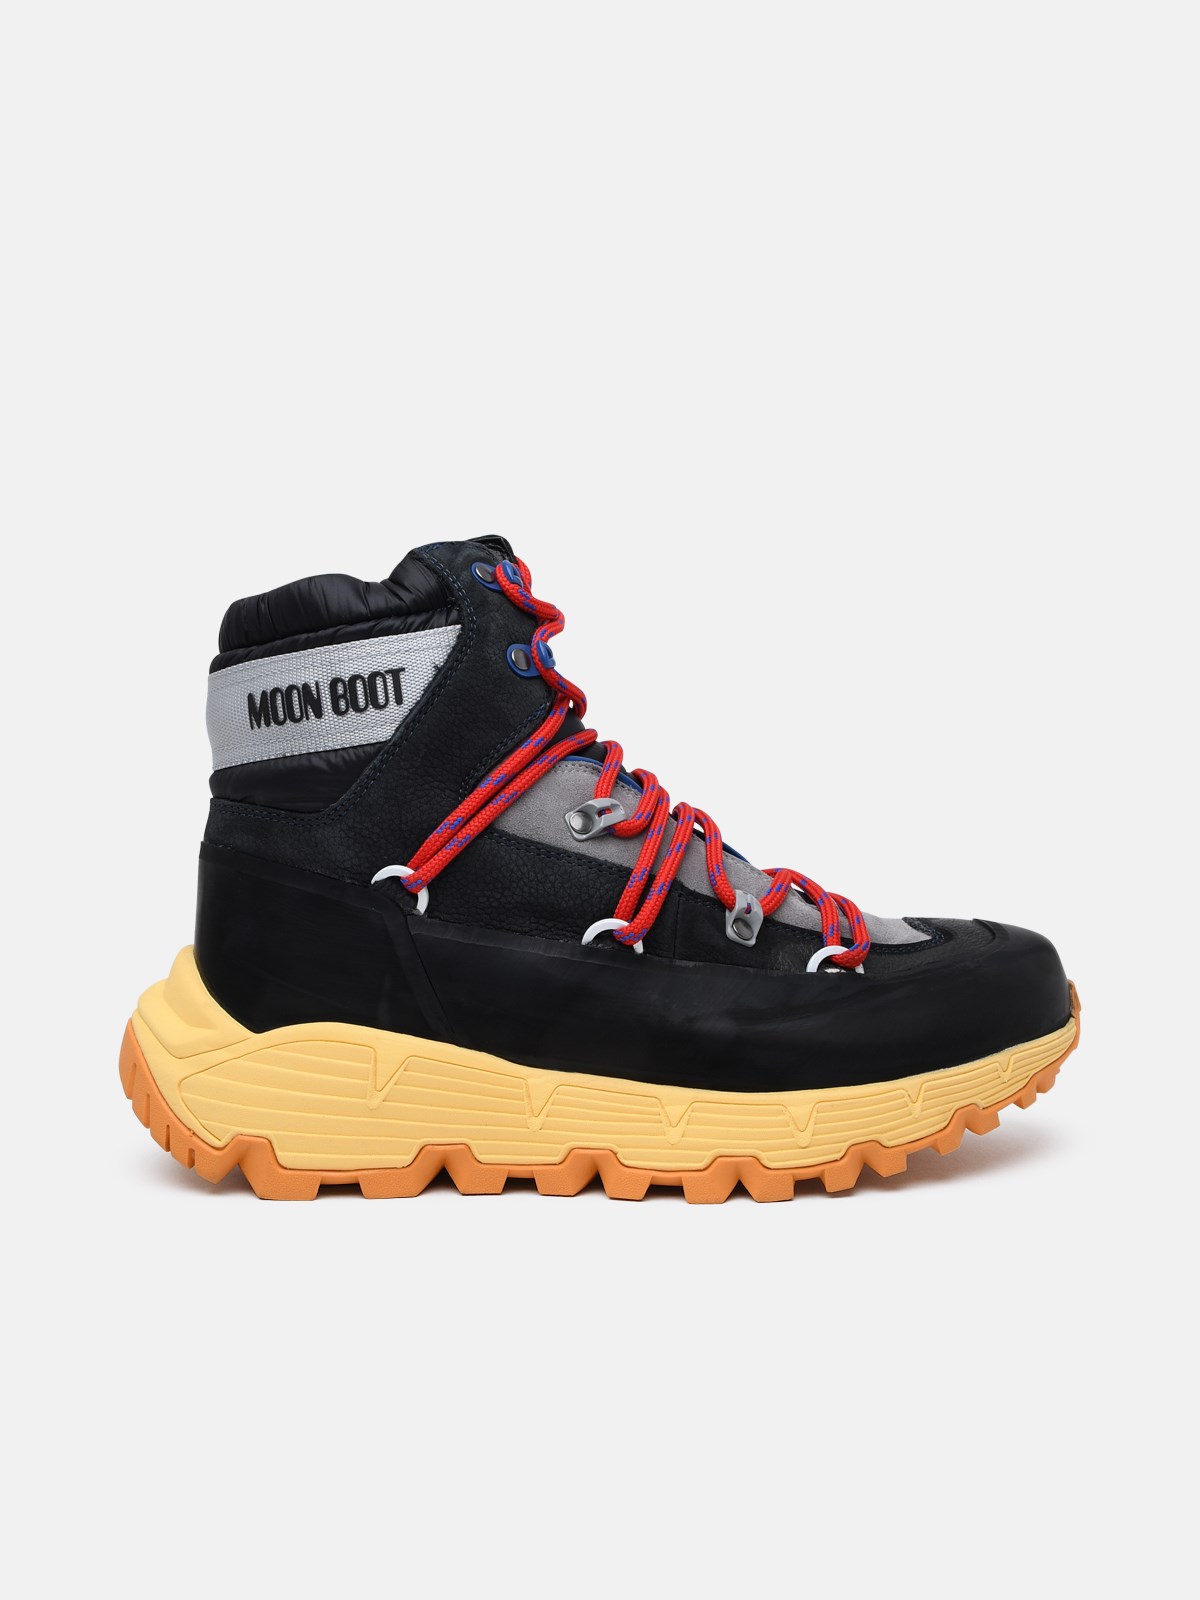 Moonboot Black Leather Blend Tech Hiker Boots